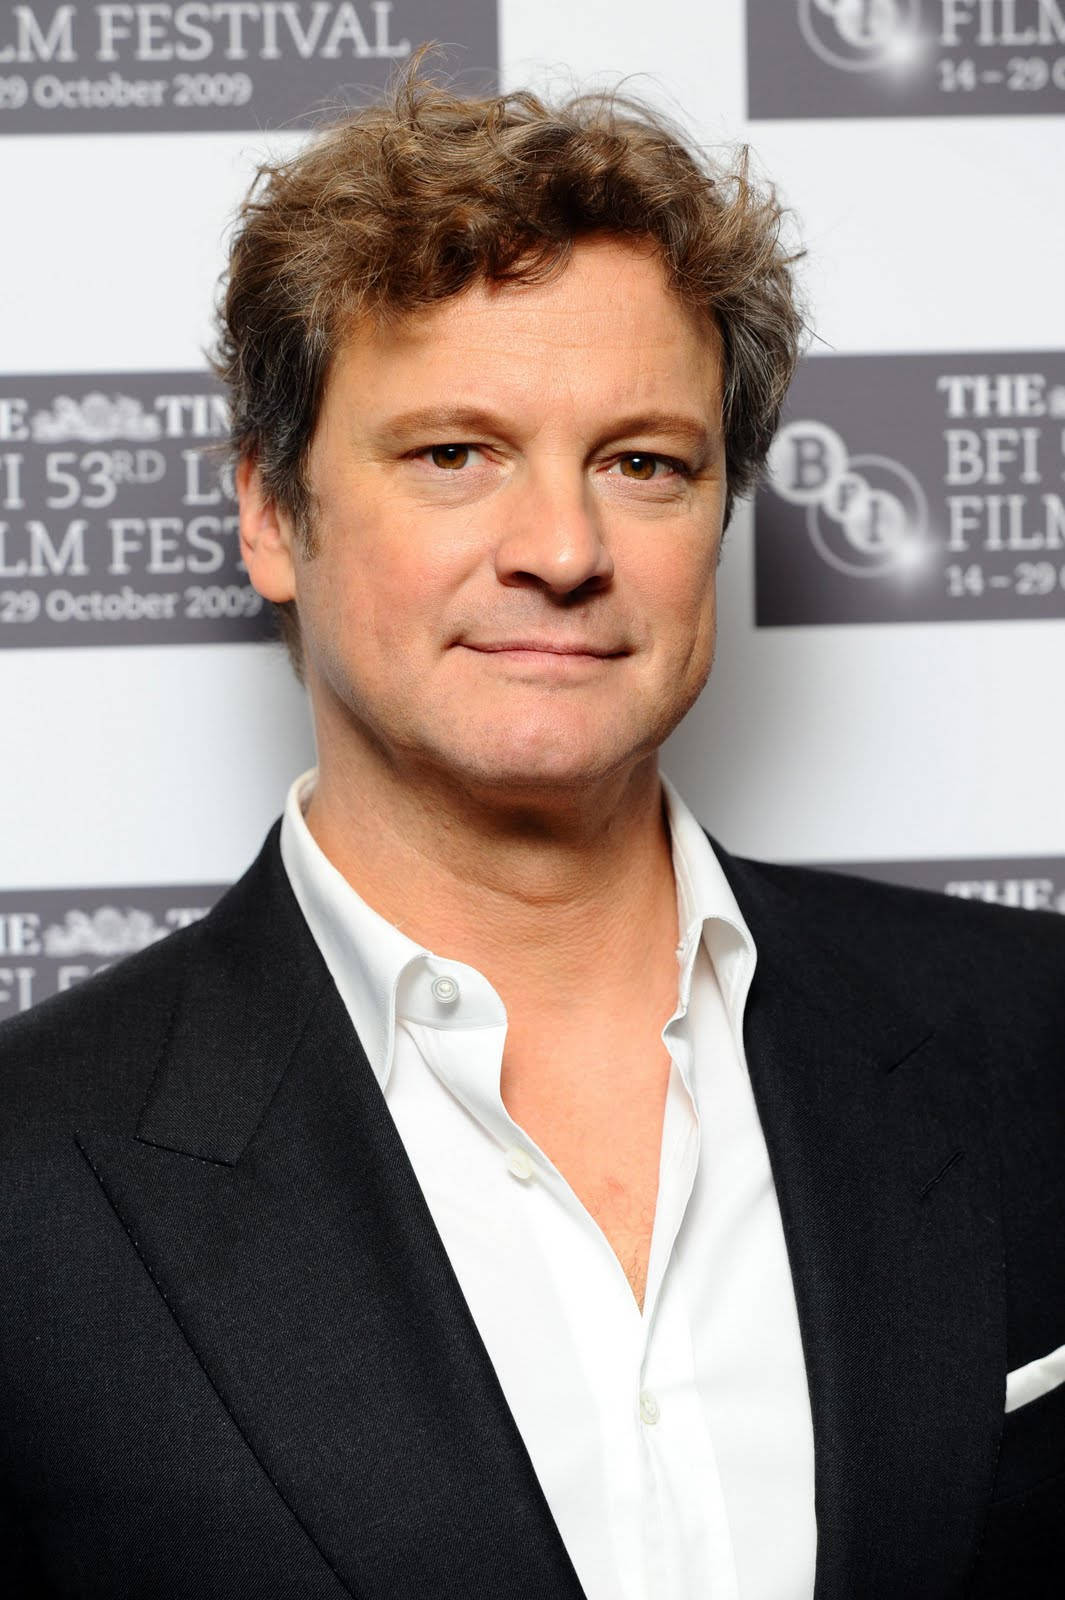 Colin Firth During 53rd BFI London Film Festival Wallpaper